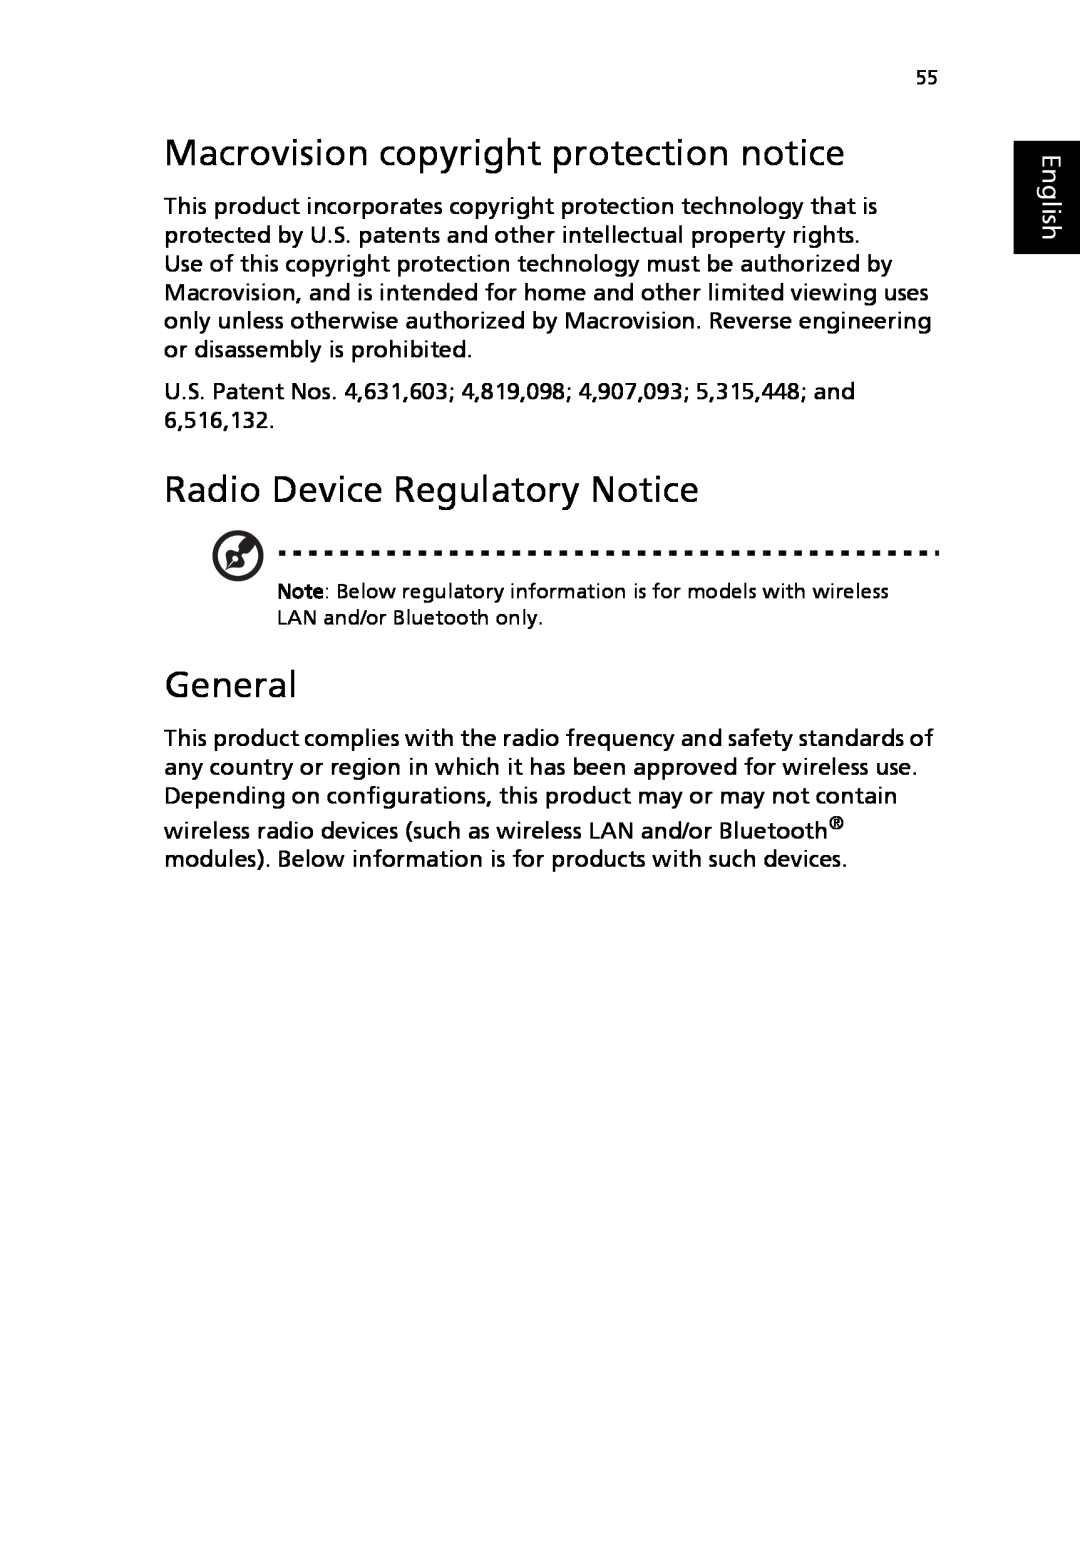 Acer 2310 Series manual Macrovision copyright protection notice, Radio Device Regulatory Notice, General, English 